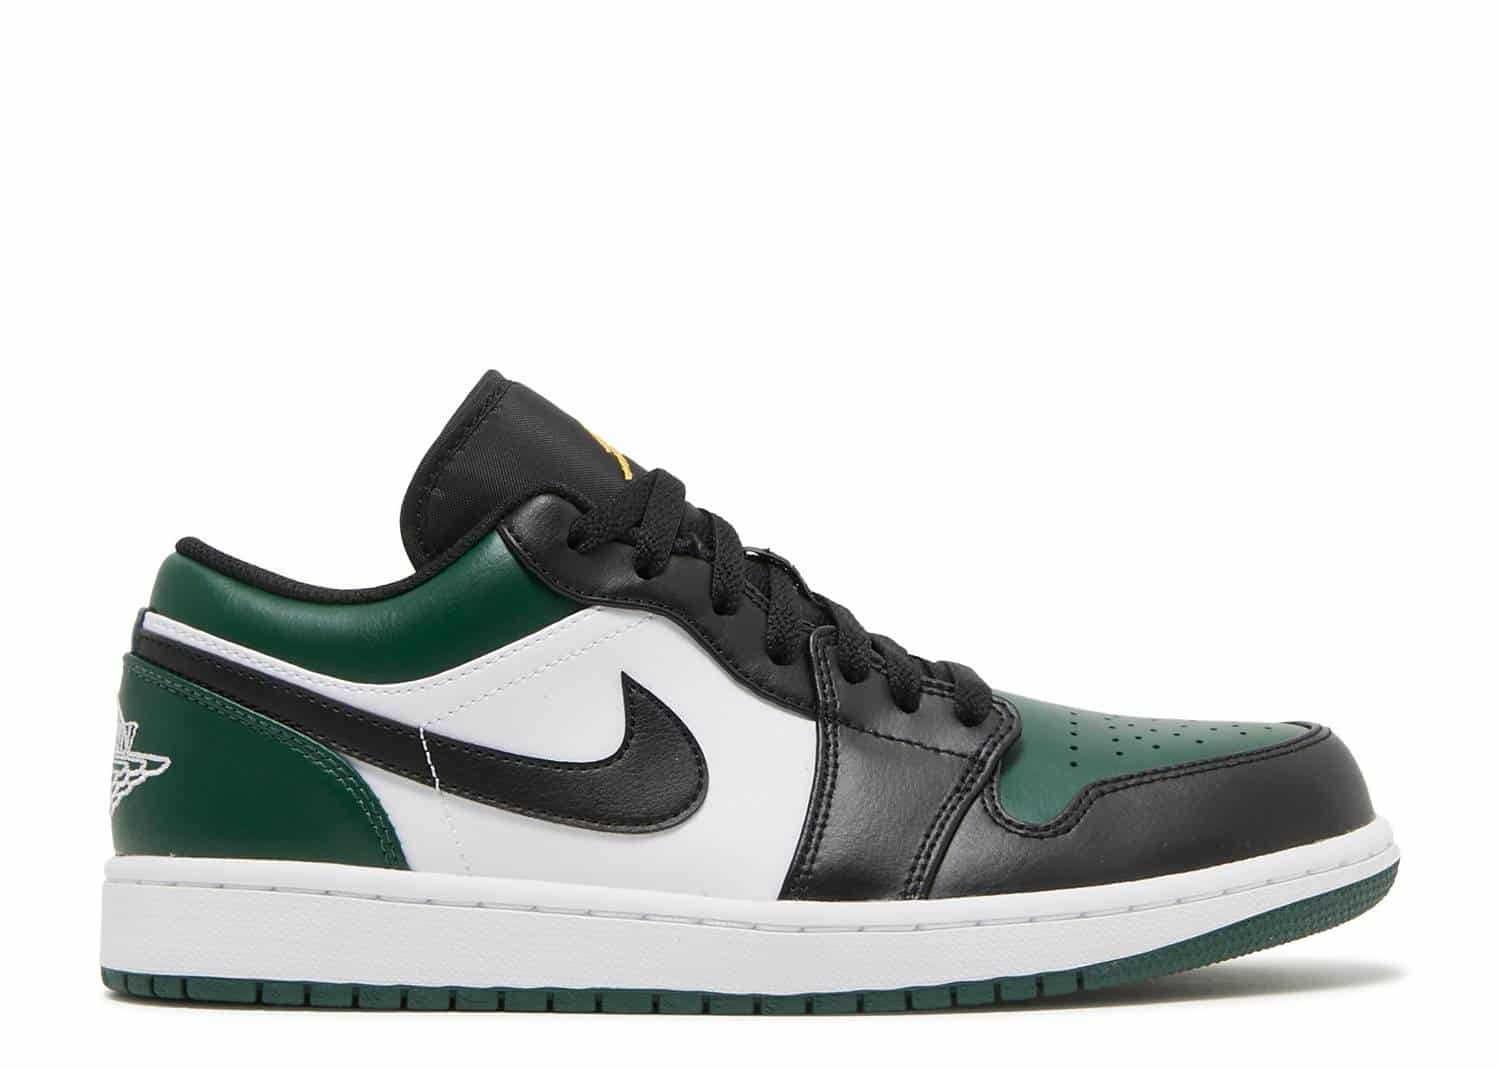 Nike Air Jordan 1 Low Green Toe 553558-371